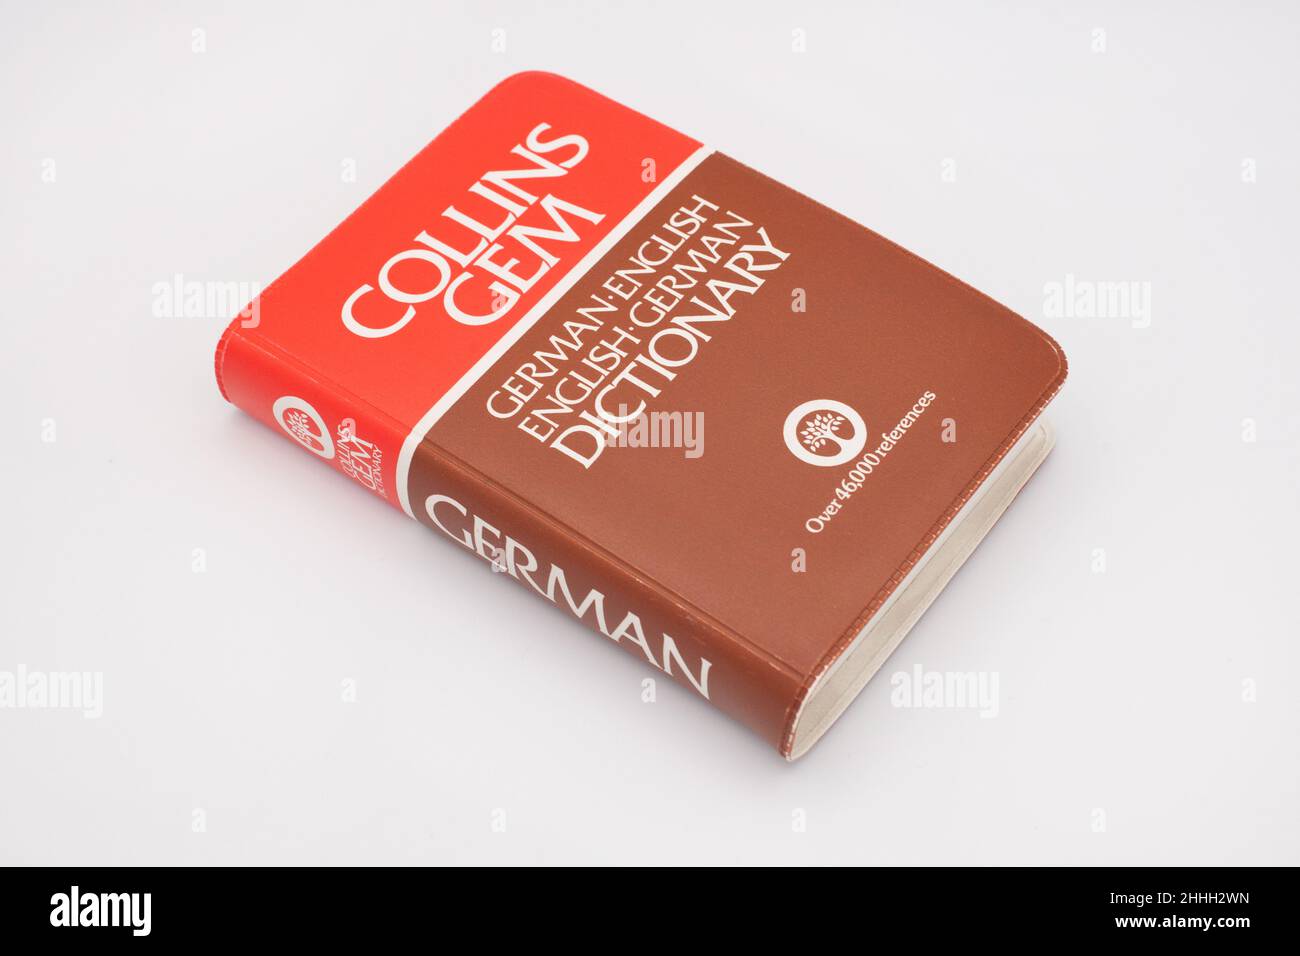 A Collins Gem, German, English Dictionary Stock Photo